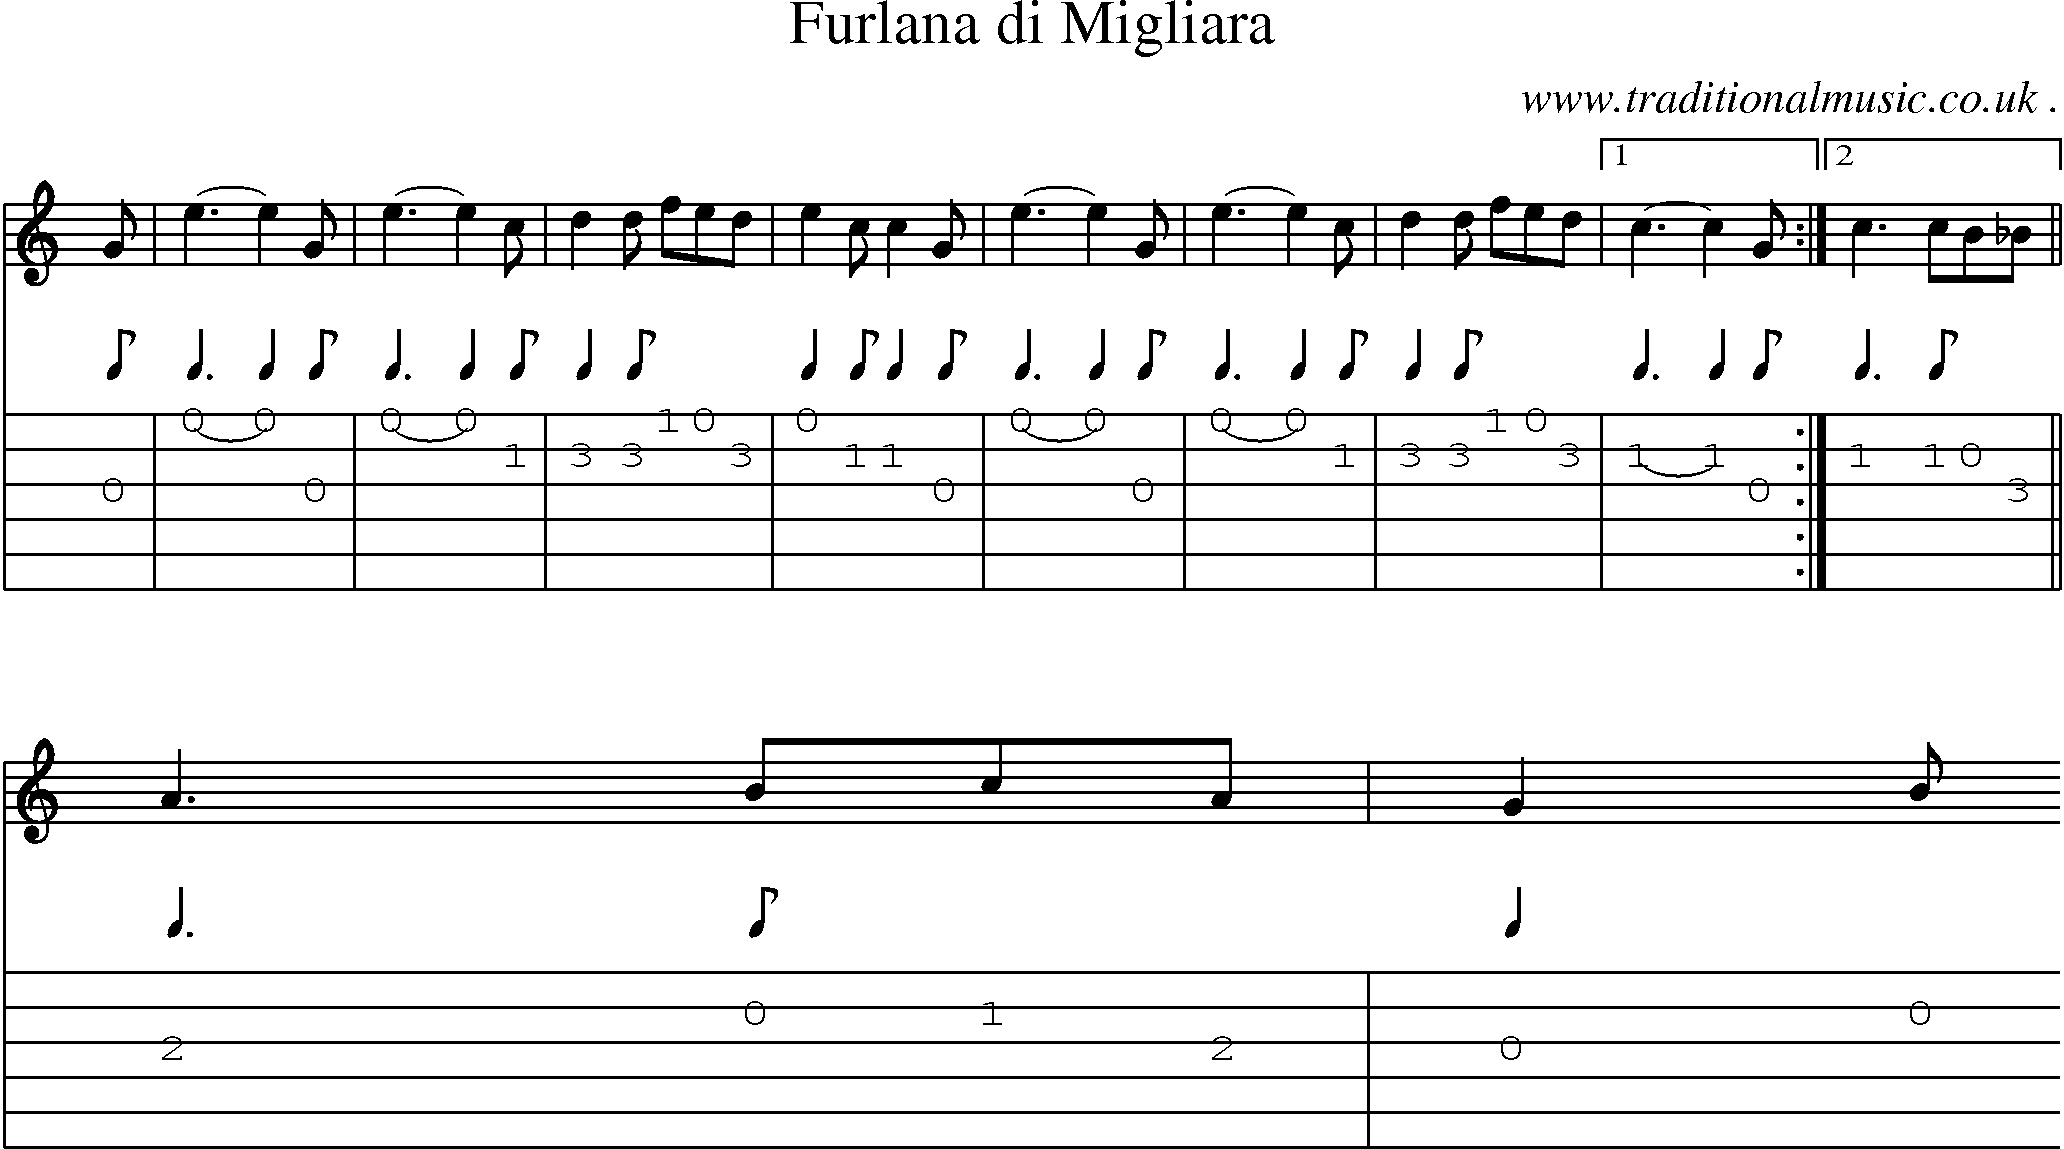 Sheet-Music and Guitar Tabs for Furlana Di Migliara